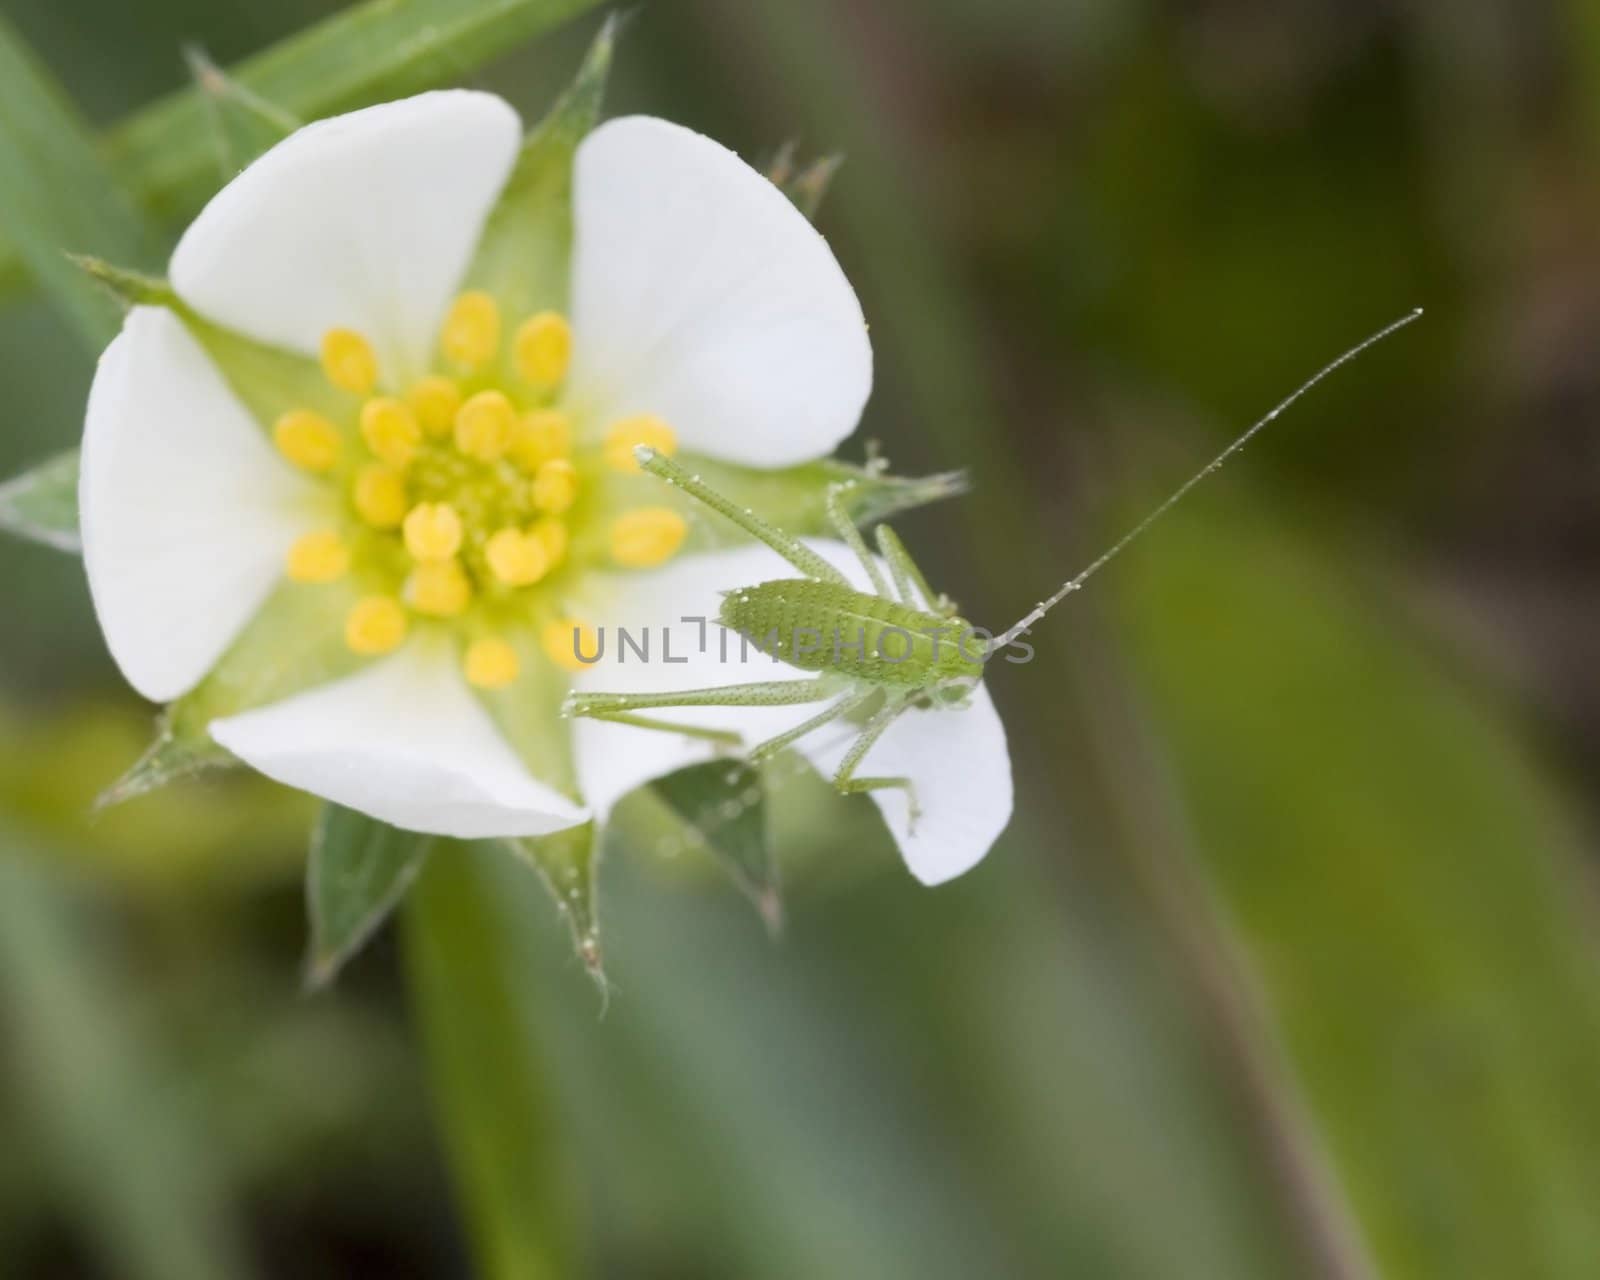 A katydid nymph perched on a flower.